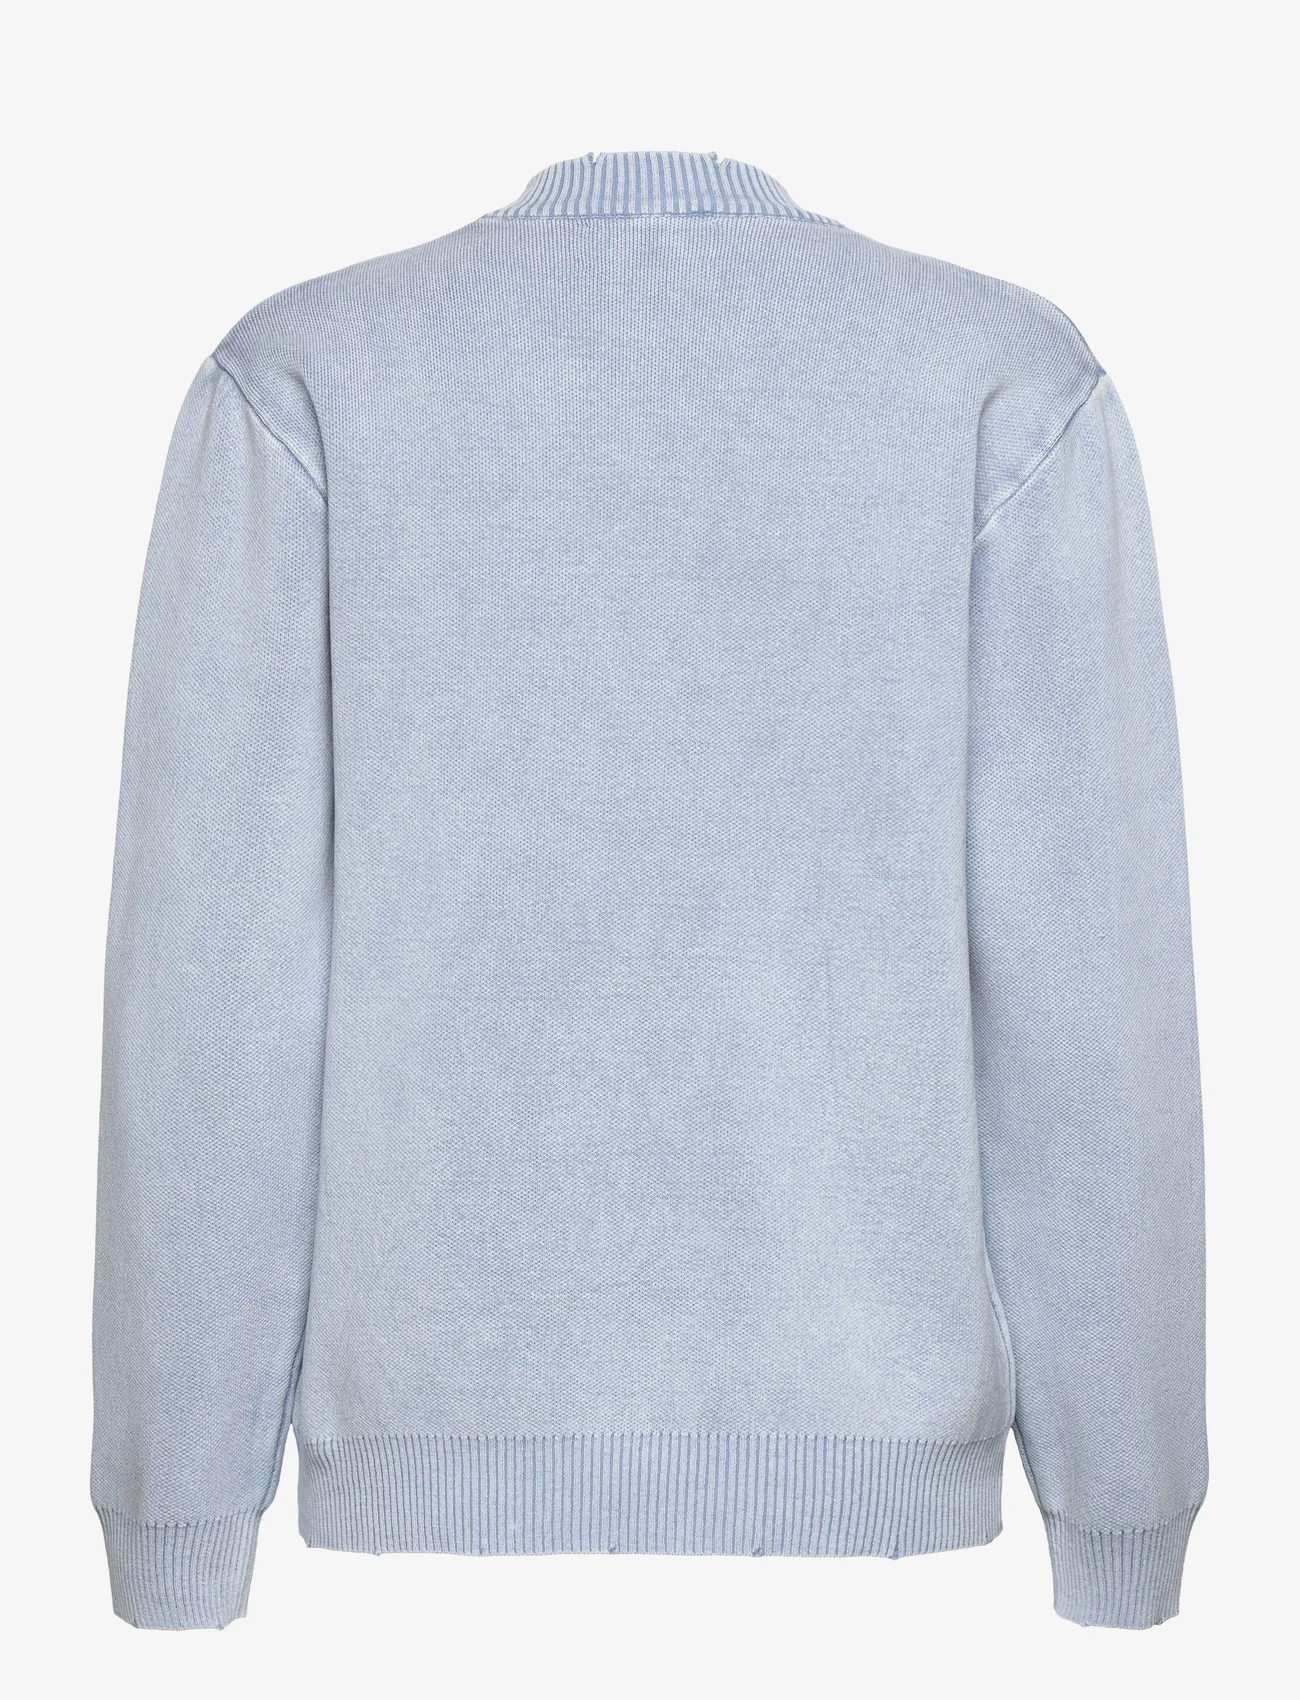 HOLZWEILER - W. Hanger Knit Crew - sportiska stila džemperi un džemperi ar kapuci - lt. blue - 1